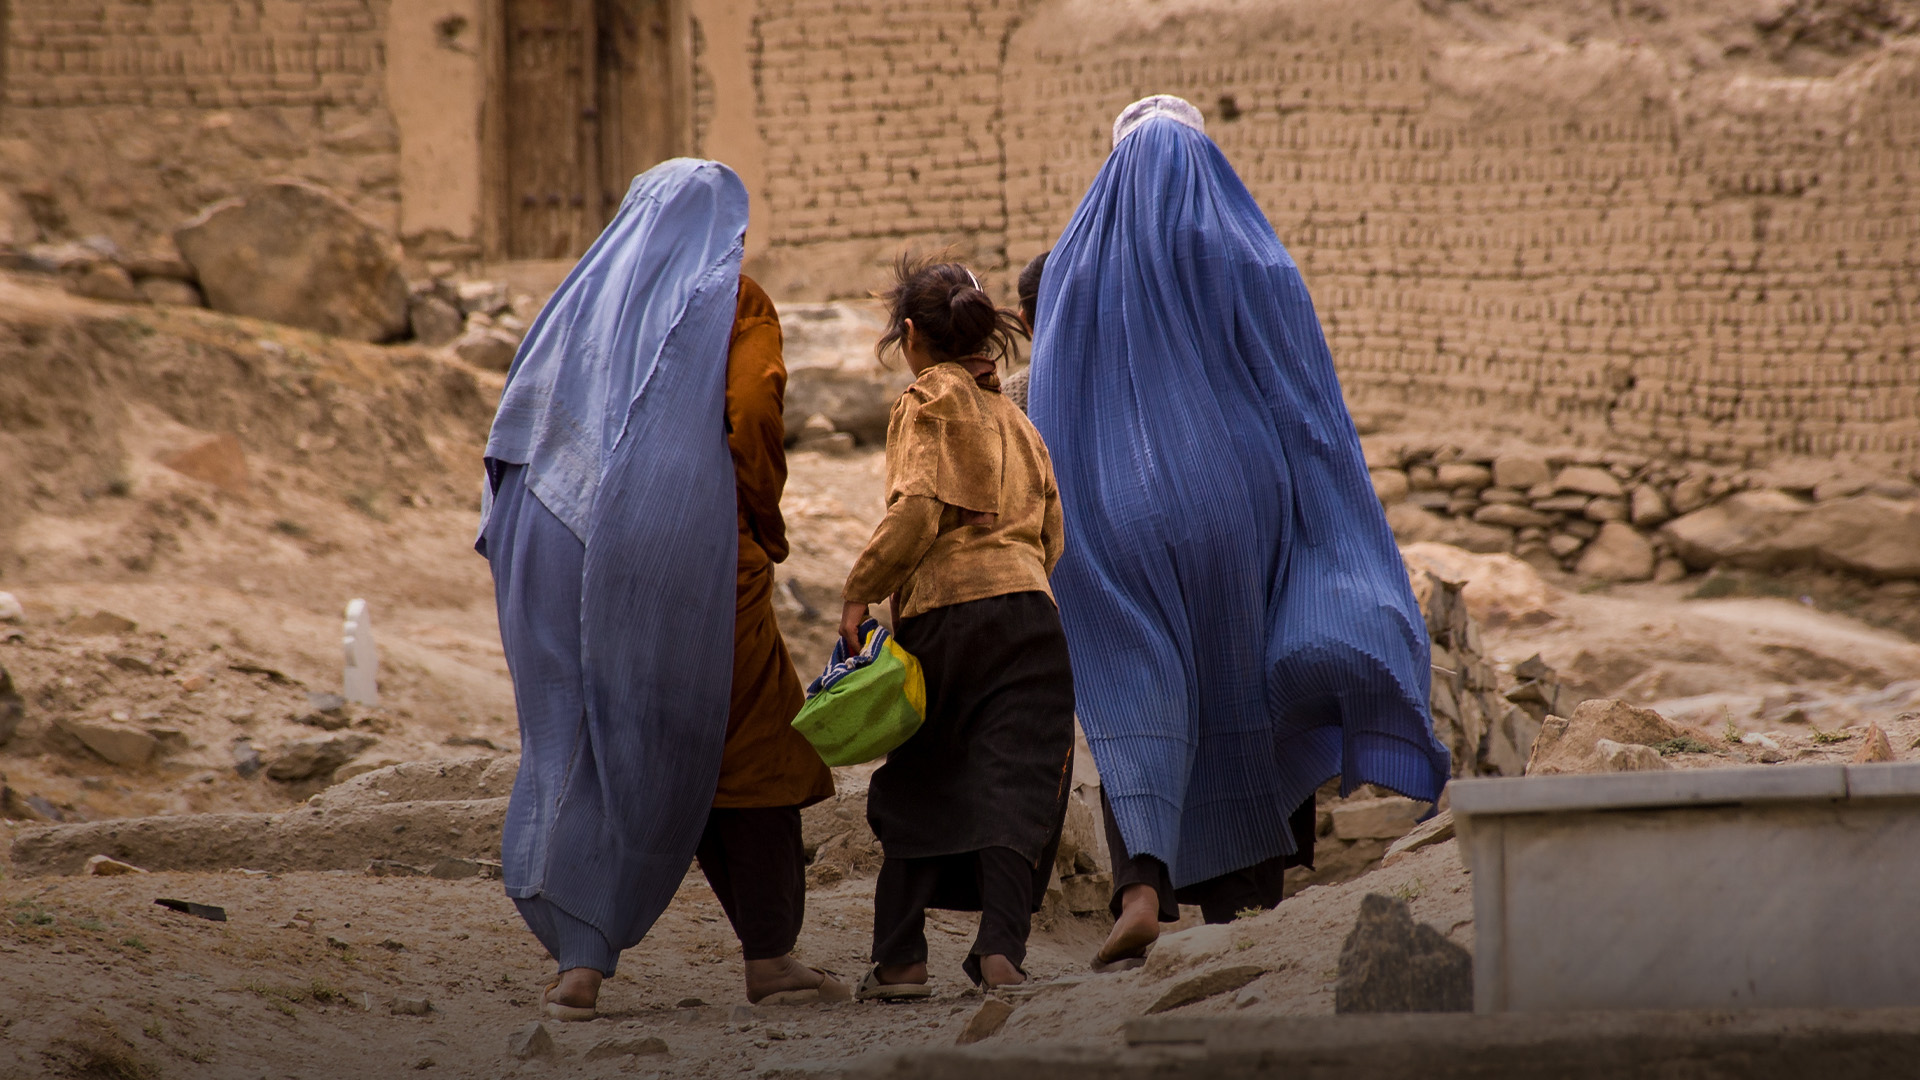 Girls and women in burqas walk through a graveyard near Kabul